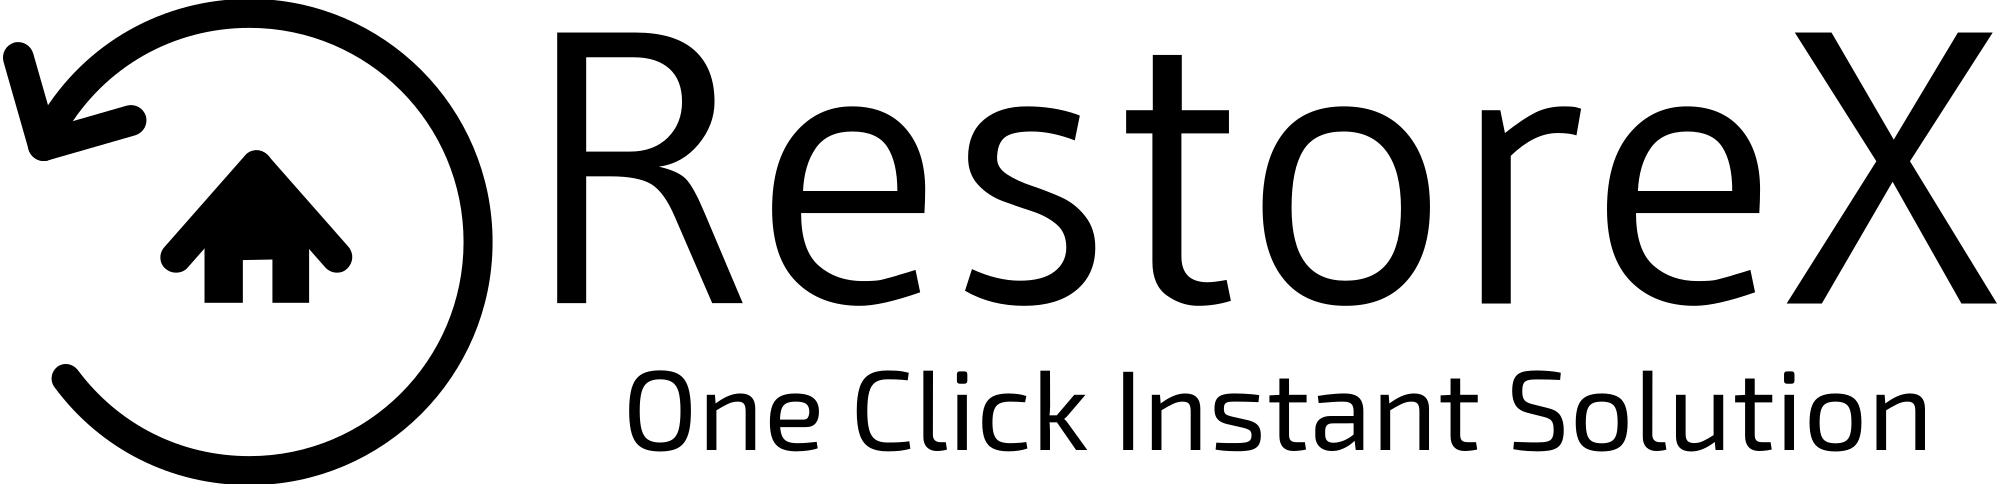 Restorex High Resolution Logo Black Transparent